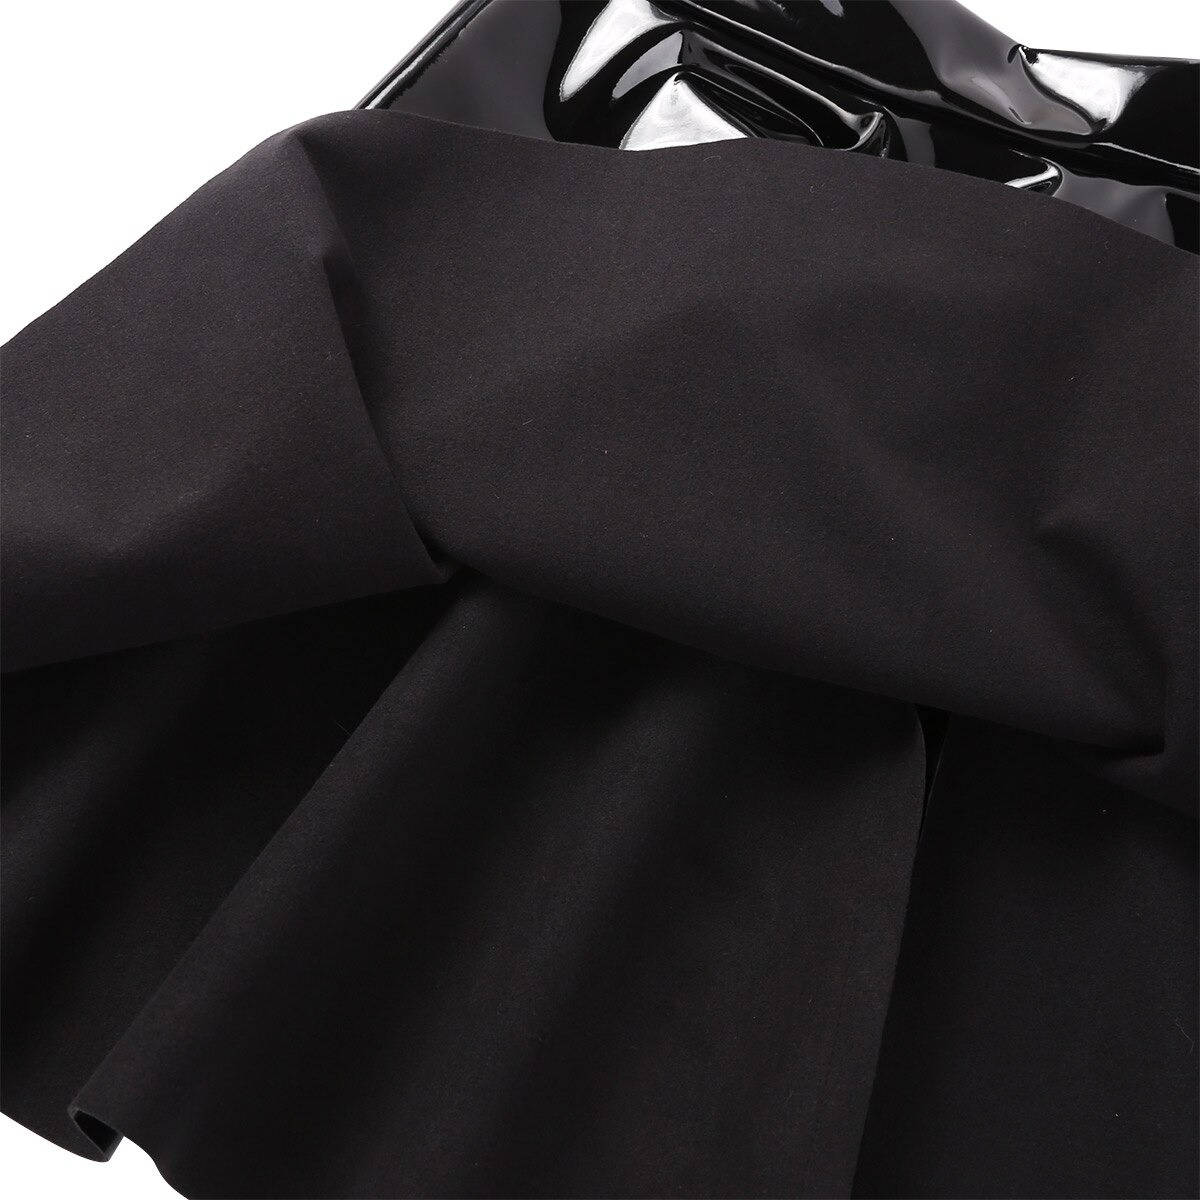 Women's High Waist PU Leather Mini Skirt / Sexy Flared Pleated Latex A-Line Skirts - HARD'N'HEAVY